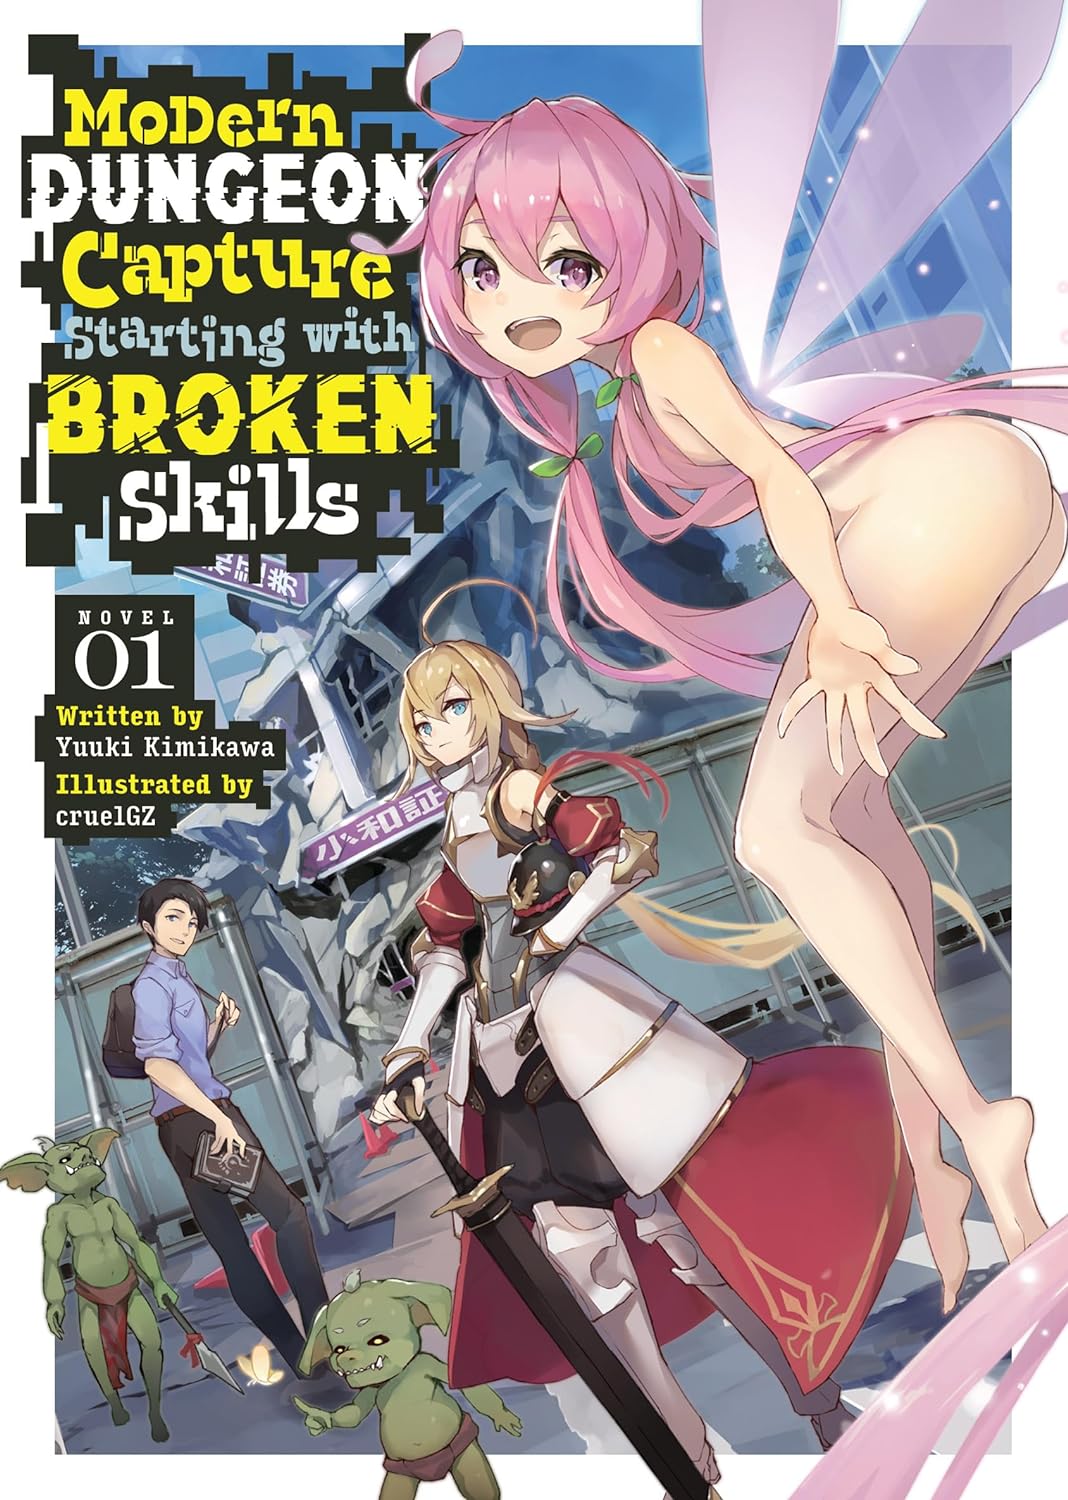 Modern Dungeon Capture Starting with Broken Skills (Light Novel) Vol. 01